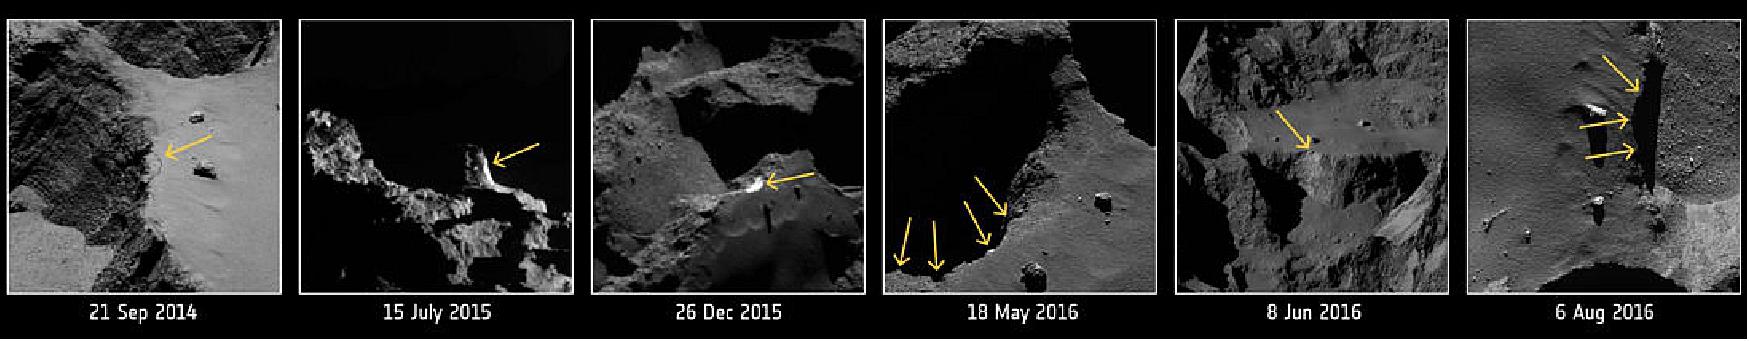 Figure 85: Evolution of a comet cliff collapse (image credit: ESA/Rosetta/MPS for OSIRIS Team MPS/UPD/LAM/IAA/SSO/INTA/UPM/DASP/IDA)